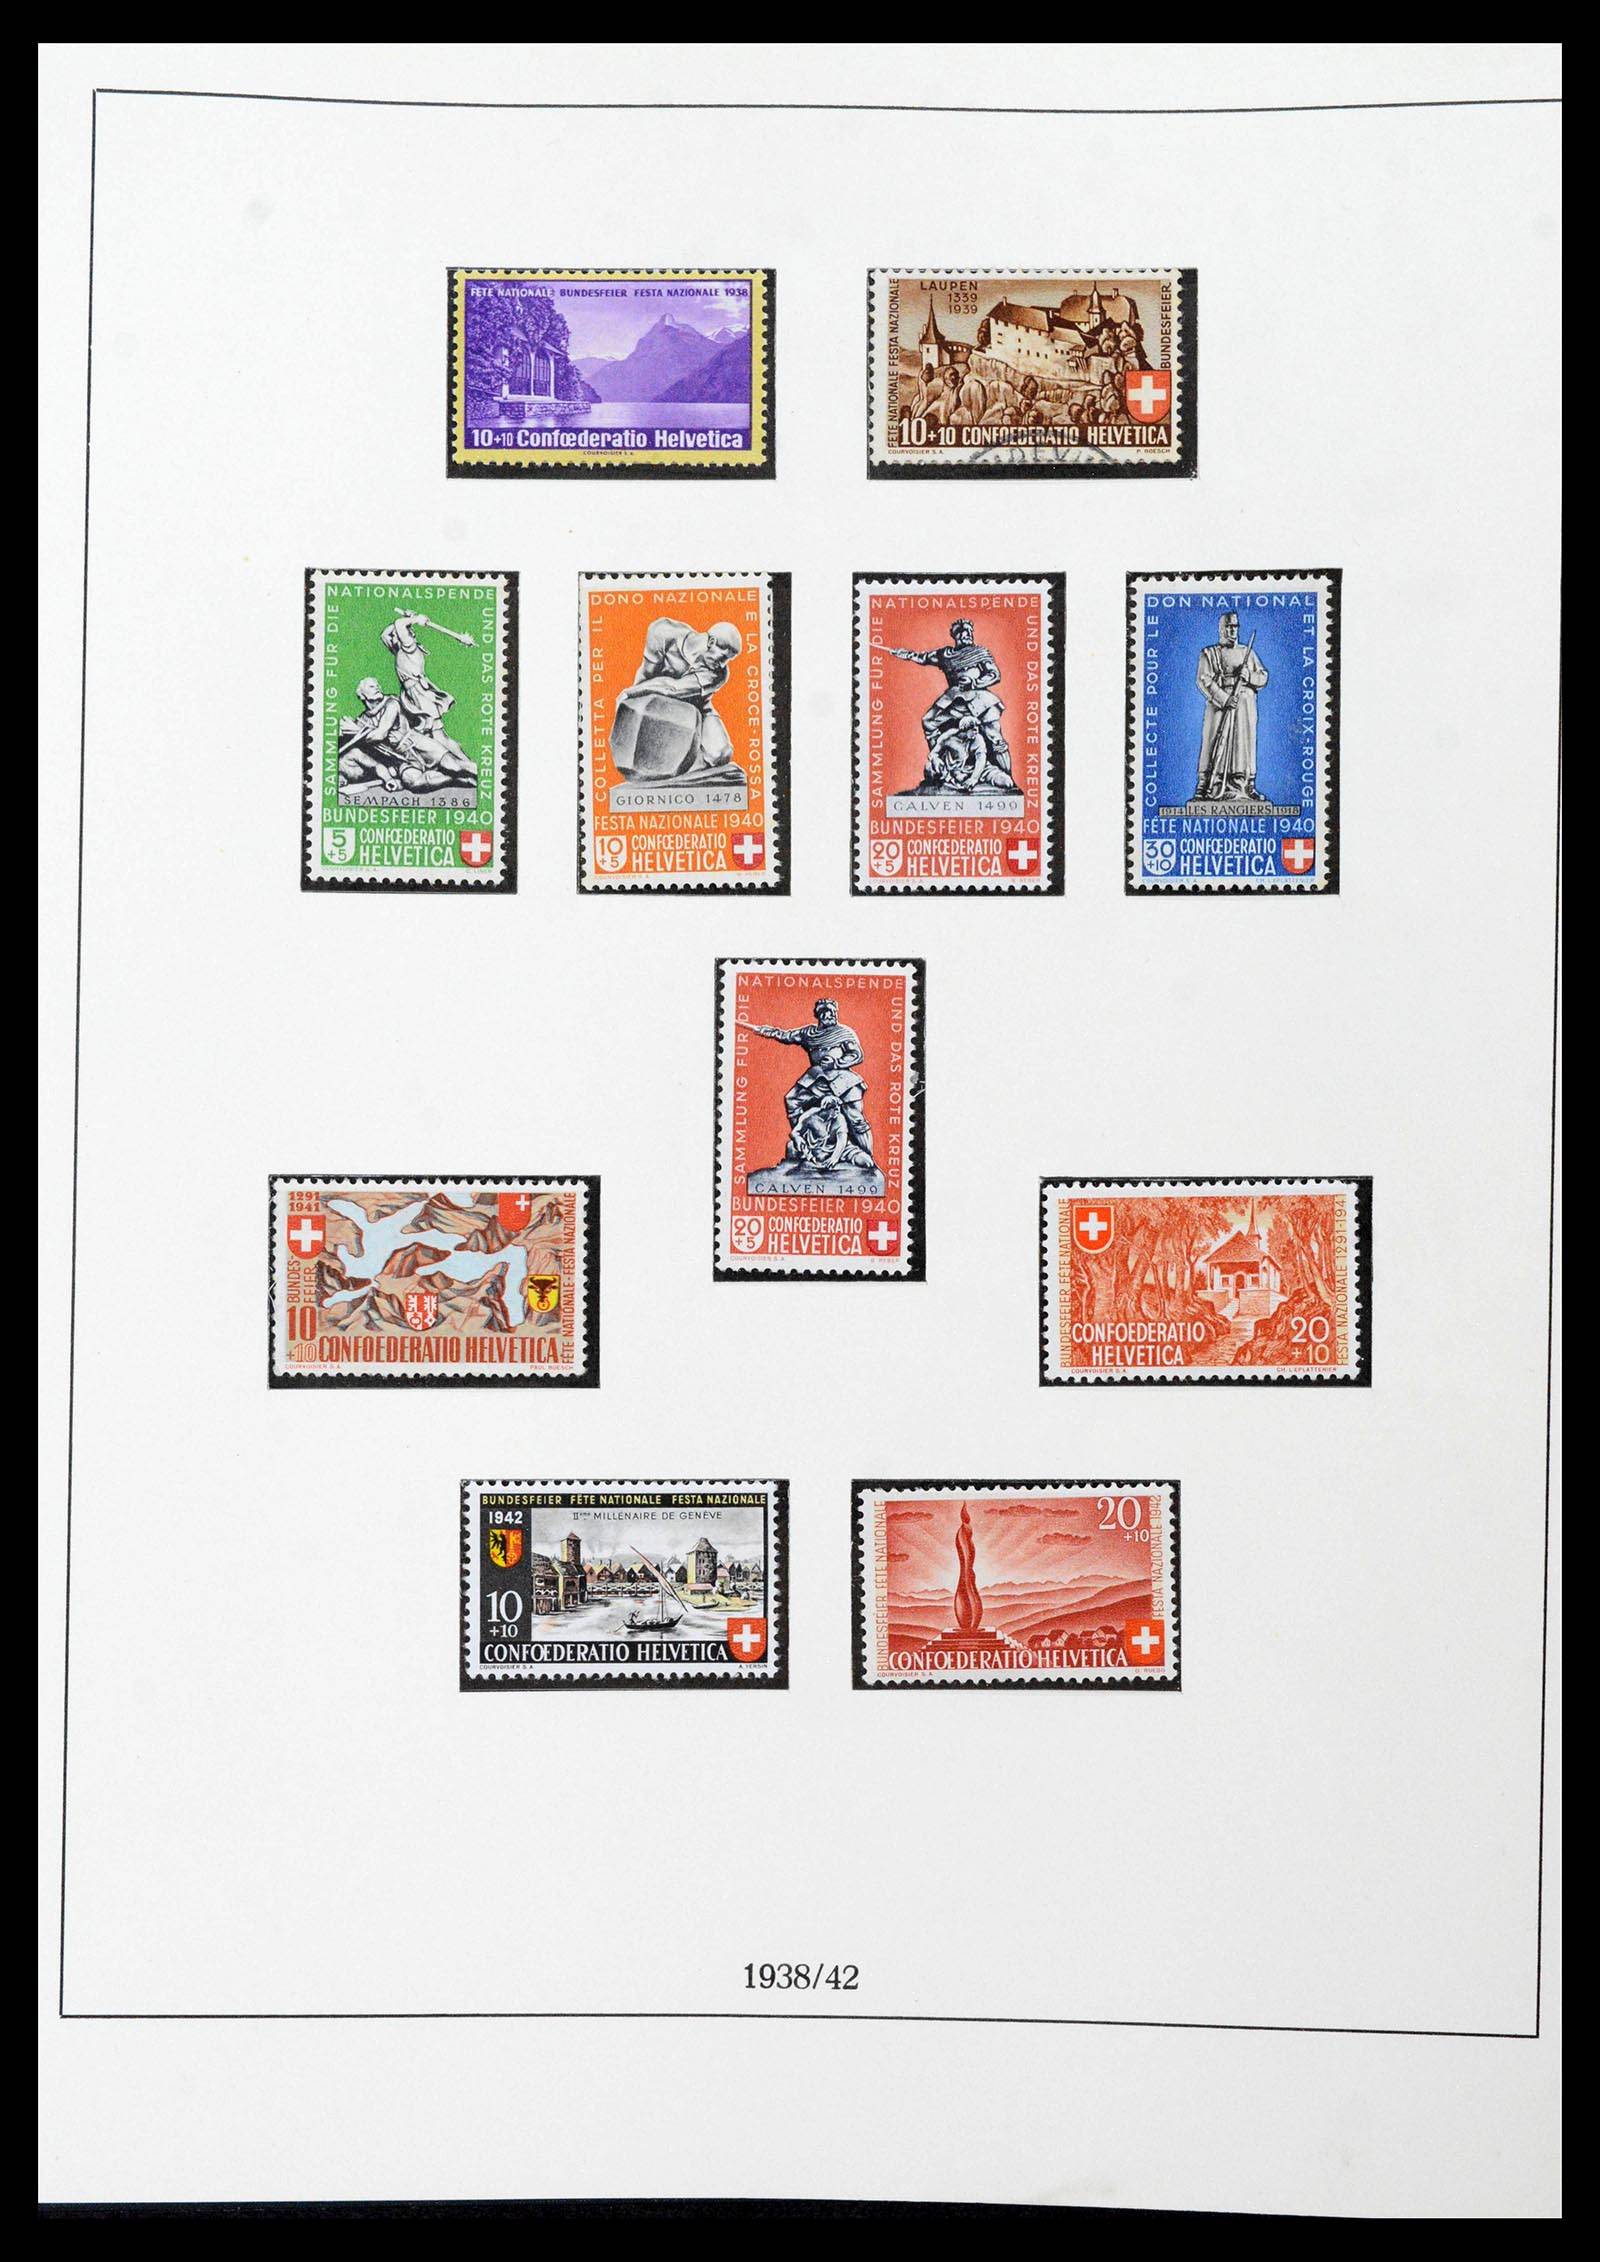 39235 0030 - Stamp collection 39235 Switzerland 1843-1960.